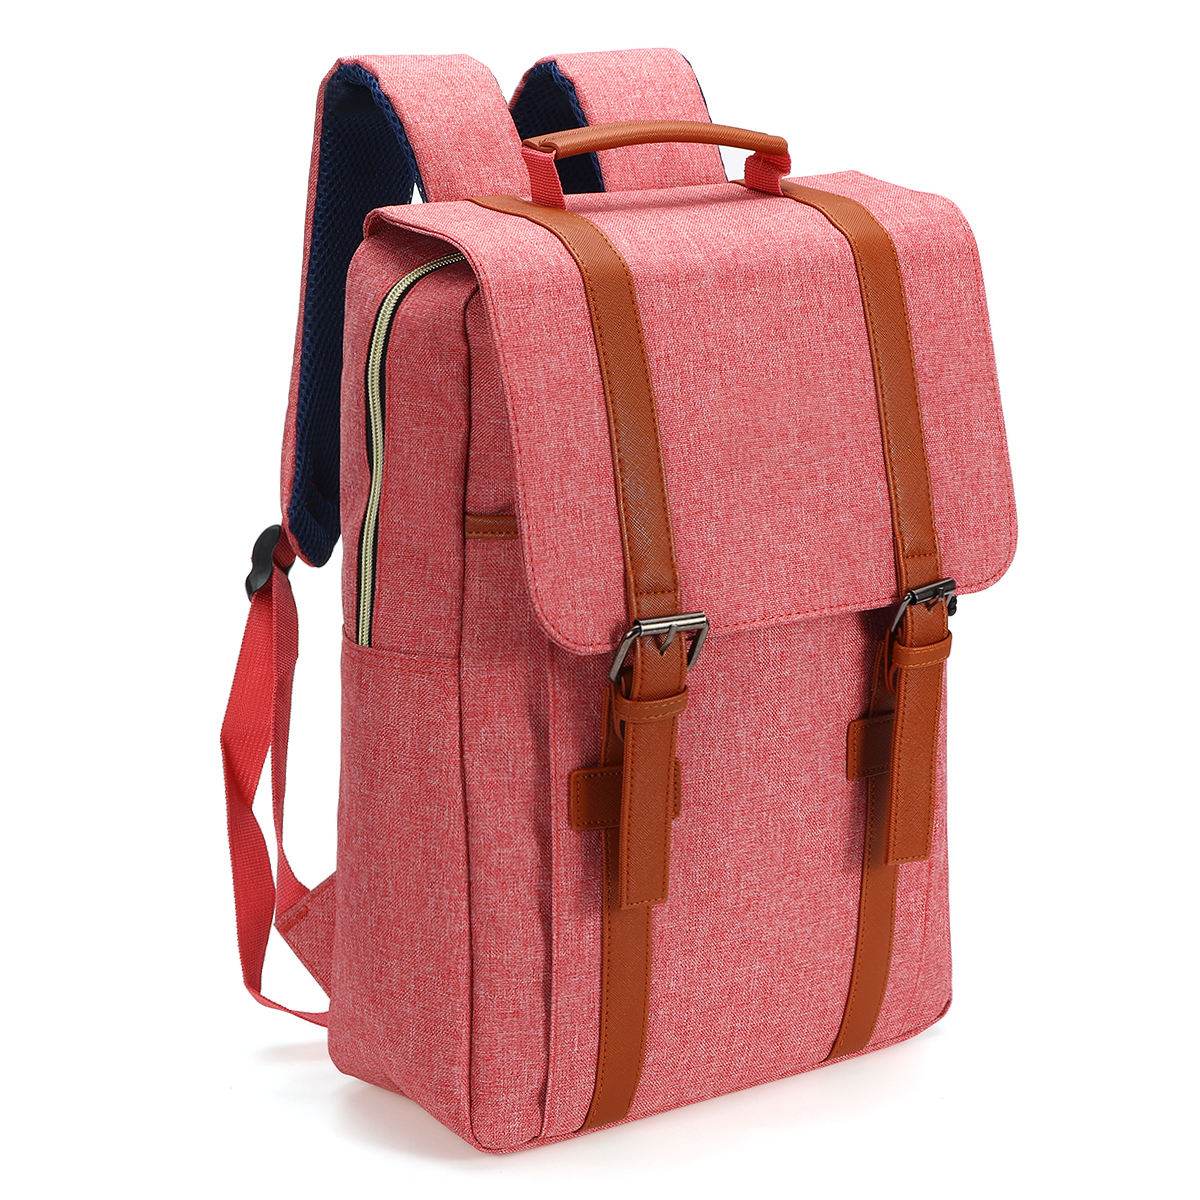 Outdoor-Travel-Backpack-Waterproof-Nylon-School-Bag-Large-Laptop-Bag-Unisex-Business-Bag-1615929-5